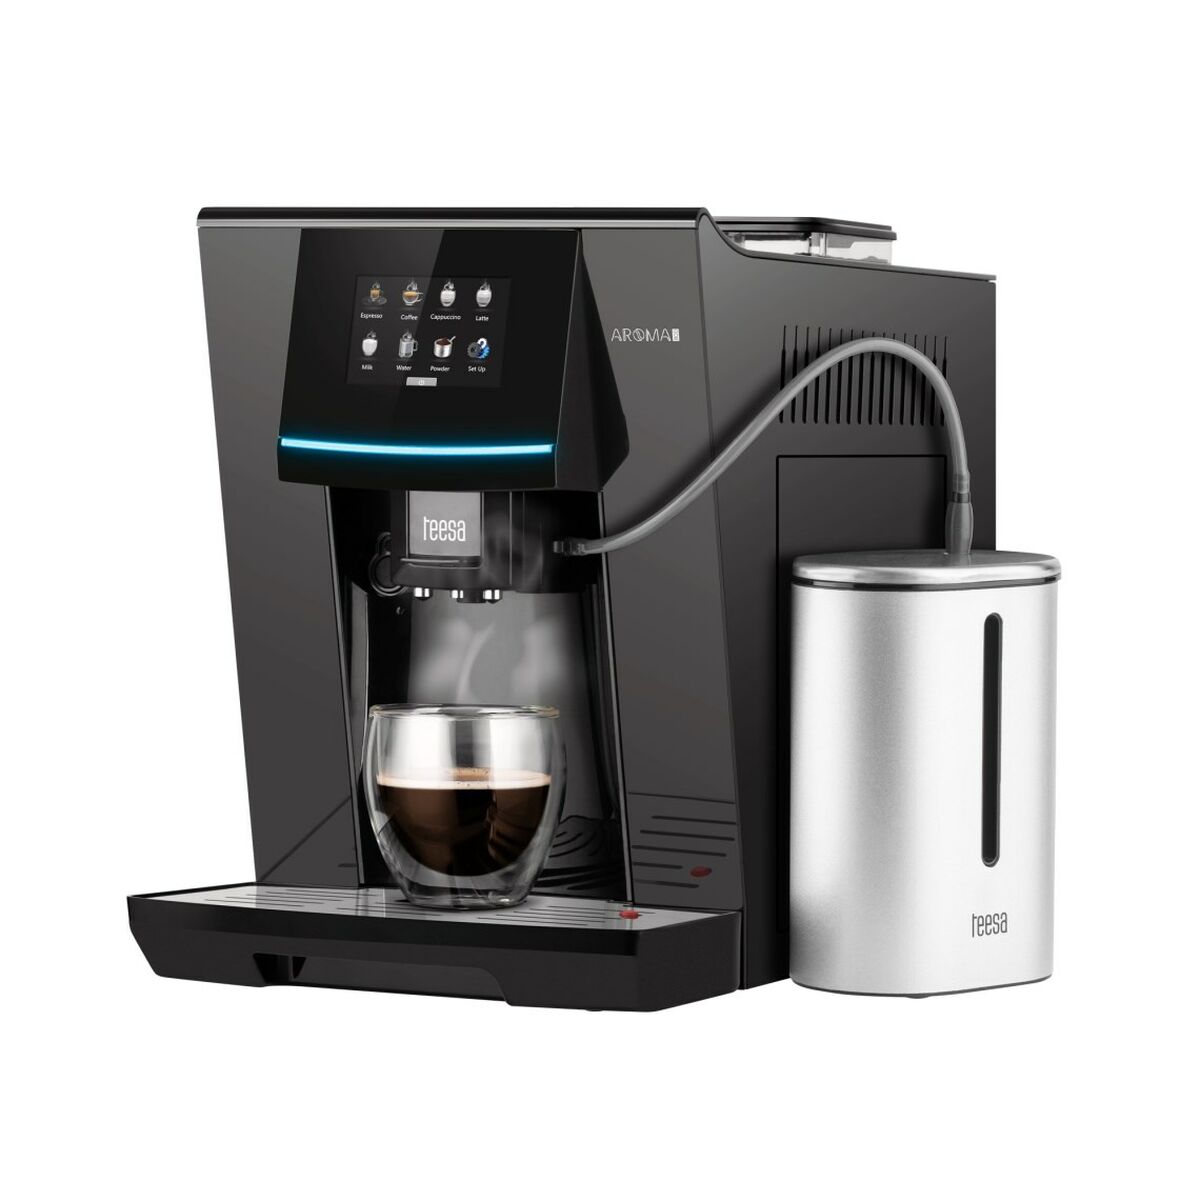 Superautomatic Coffee Maker TEESA Aroma 800 Black 1500 W 19 bar 2 L 250 g